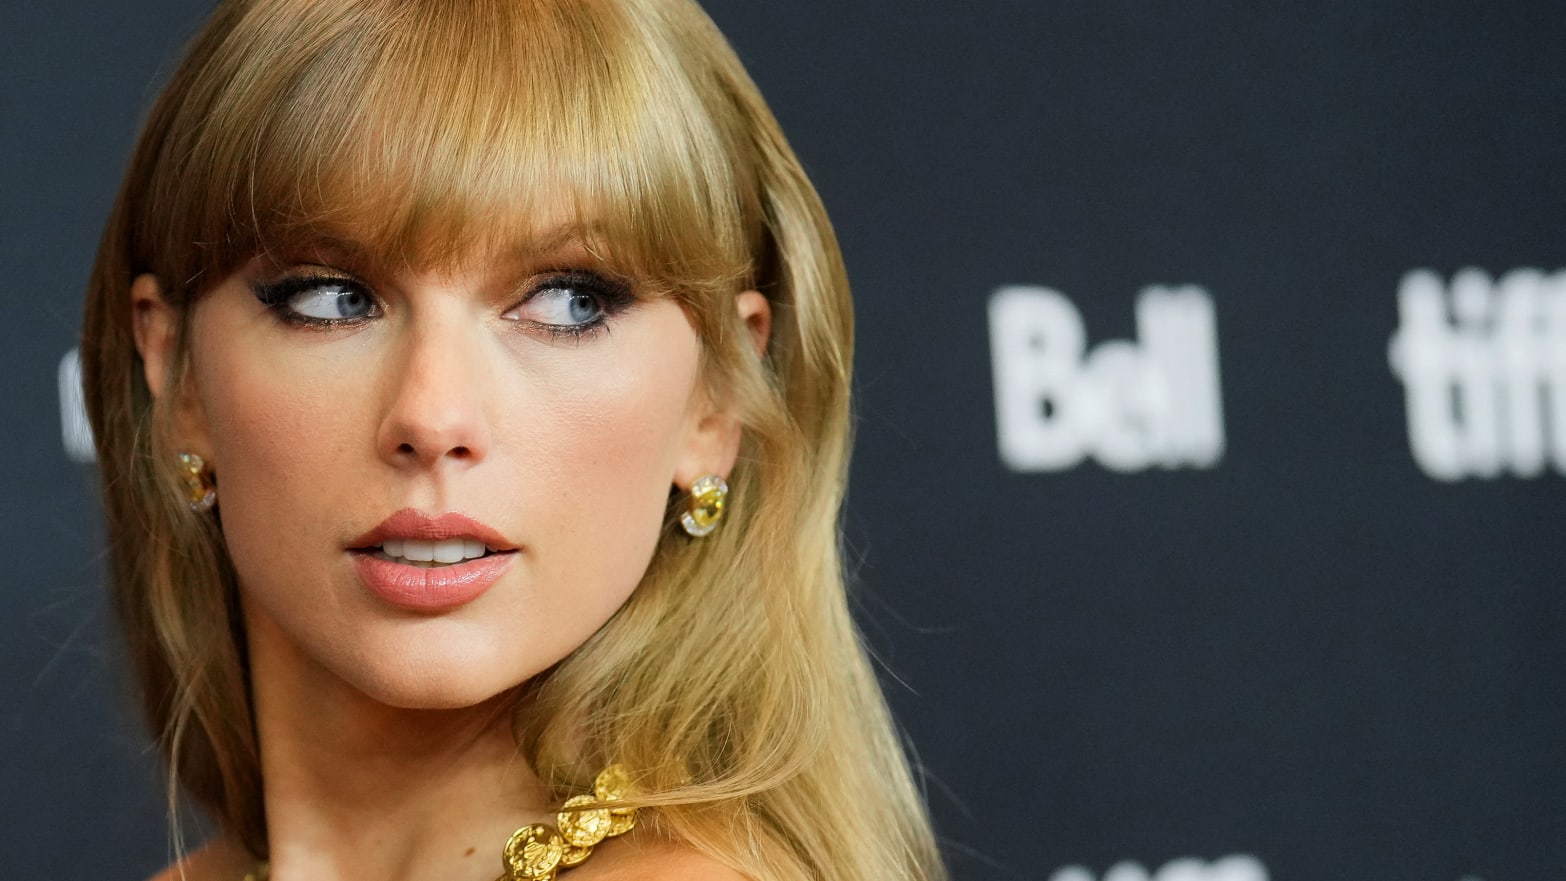 Singer Taylor Swift arrives to speak at the Toronto International Film Festival (TIFF) in Toronto, Ontario, Canada September 9, 2022. 